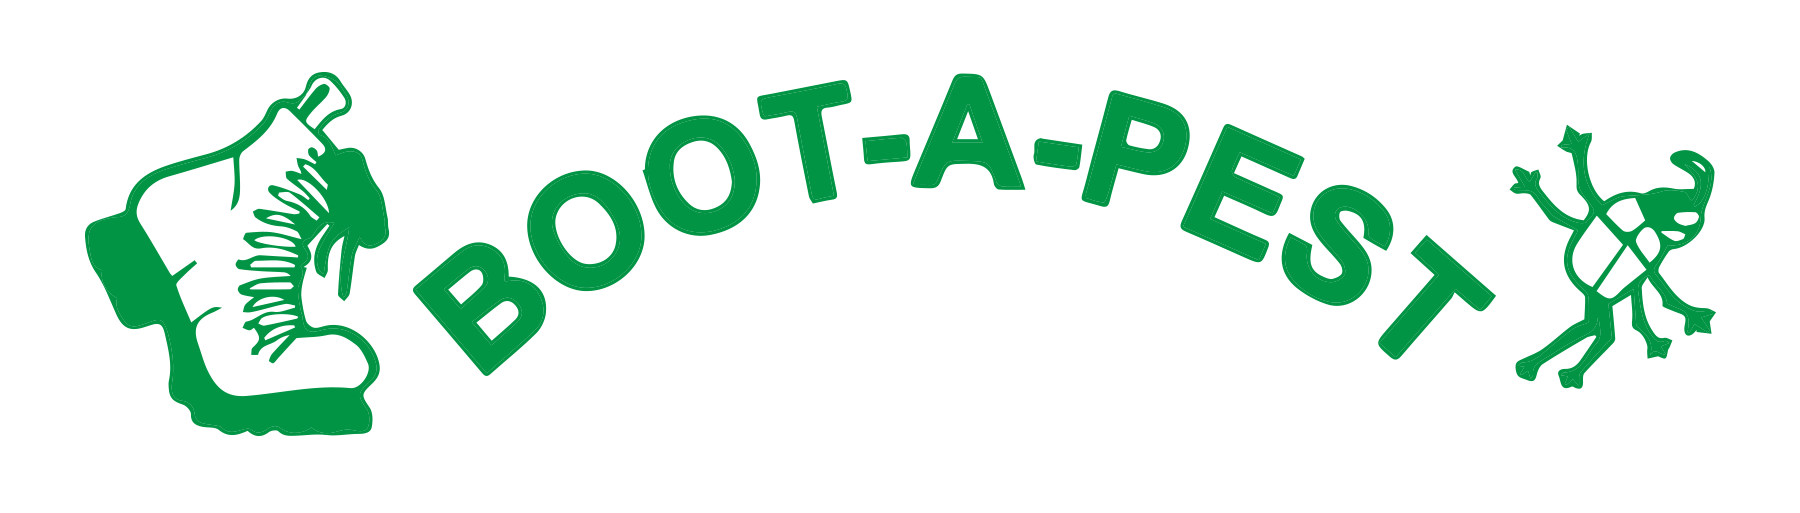 BAP Green Logo.png